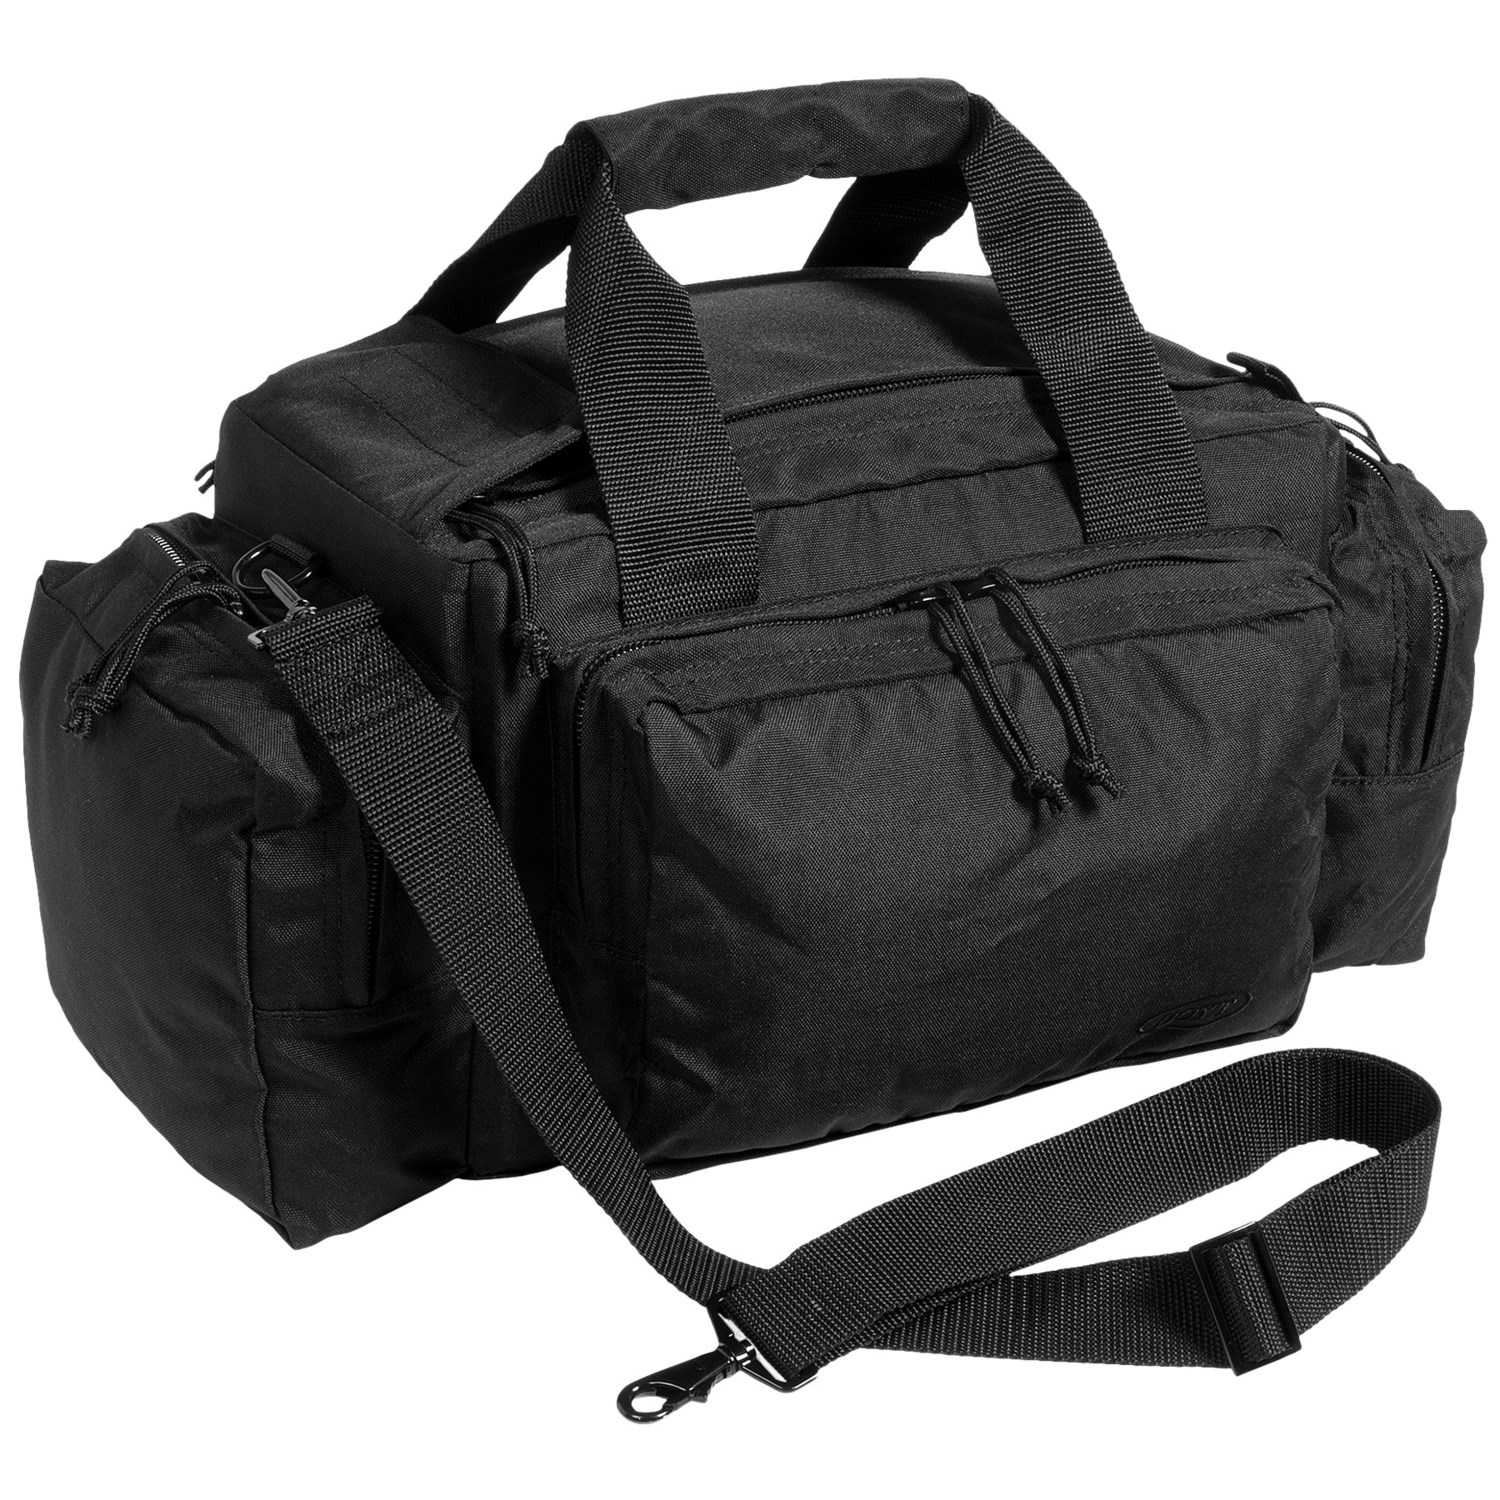 Boyt Harness Medium Tactical Range Bag - Save 52%